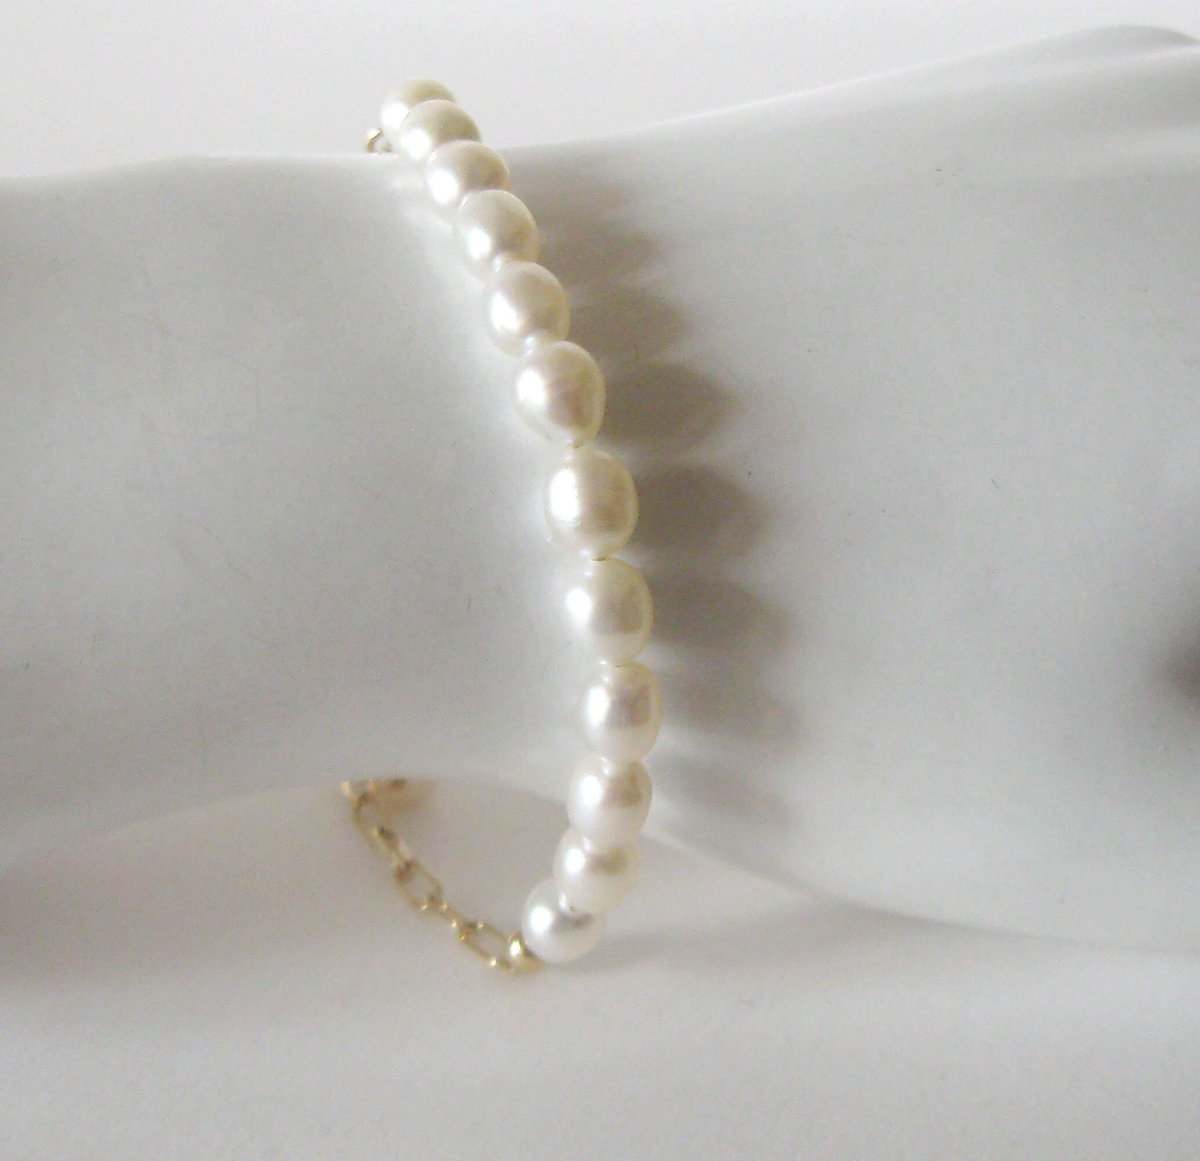 Half Pearl Half Paperclip Chain Goldfilled Adjustable Bracelet, White Freshwater Pearls tuppu.net/d914c2a4  #GoldfilledBracelet